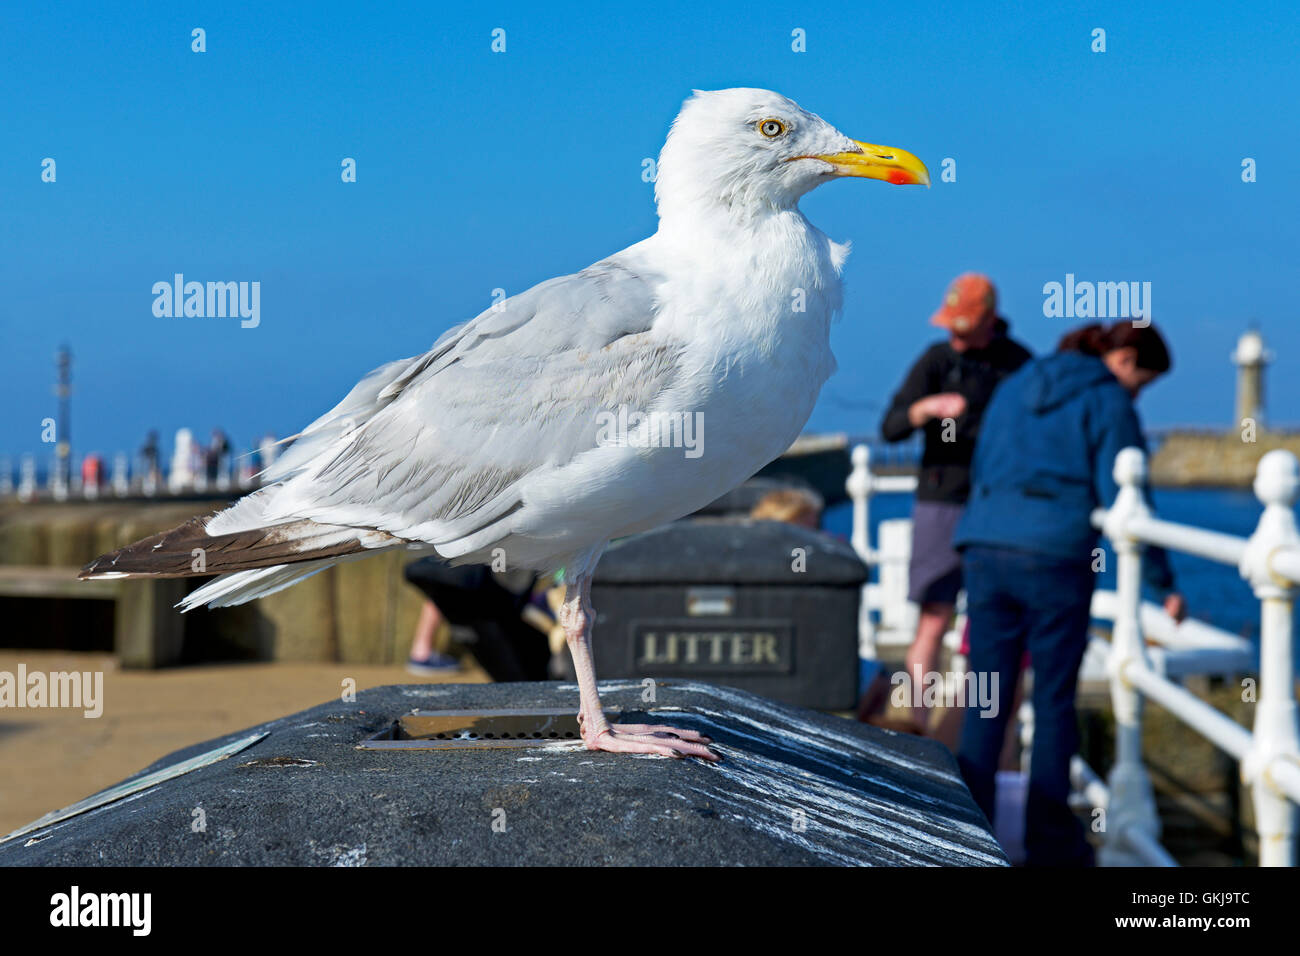 Herring Gull standing on litter bin, Whitby, North Yorkshire, England UK Stock Photo